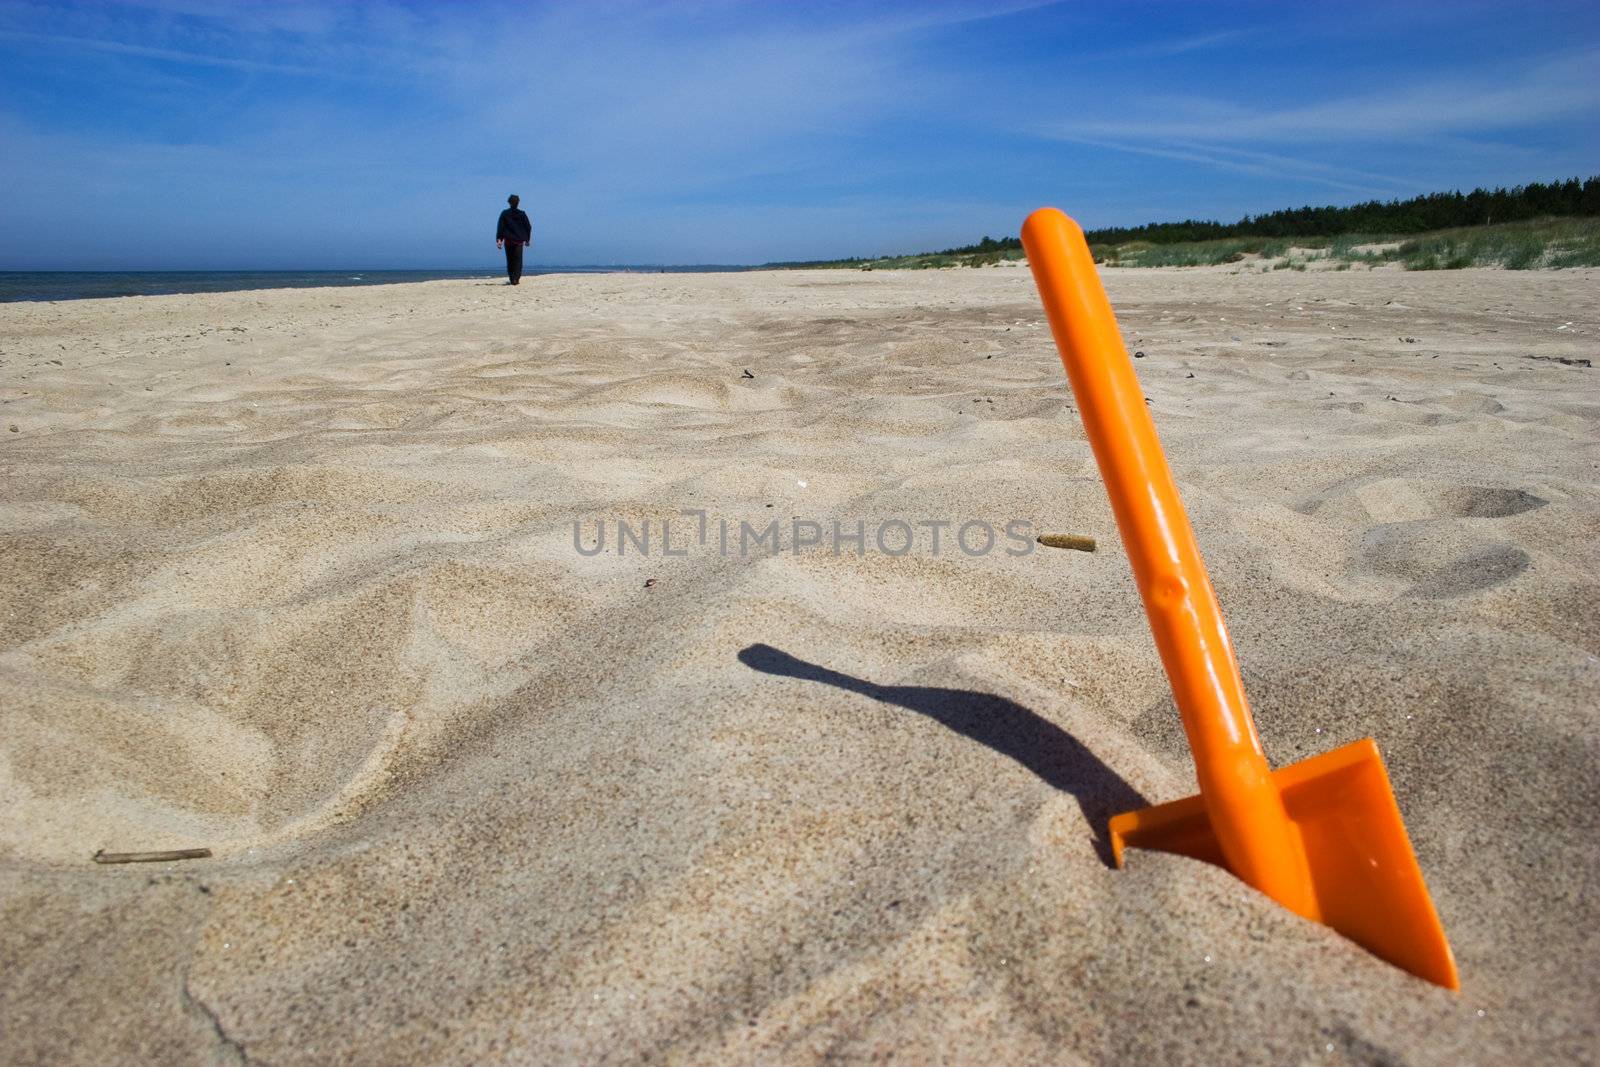 Orange plastic spade in the sandy seashore